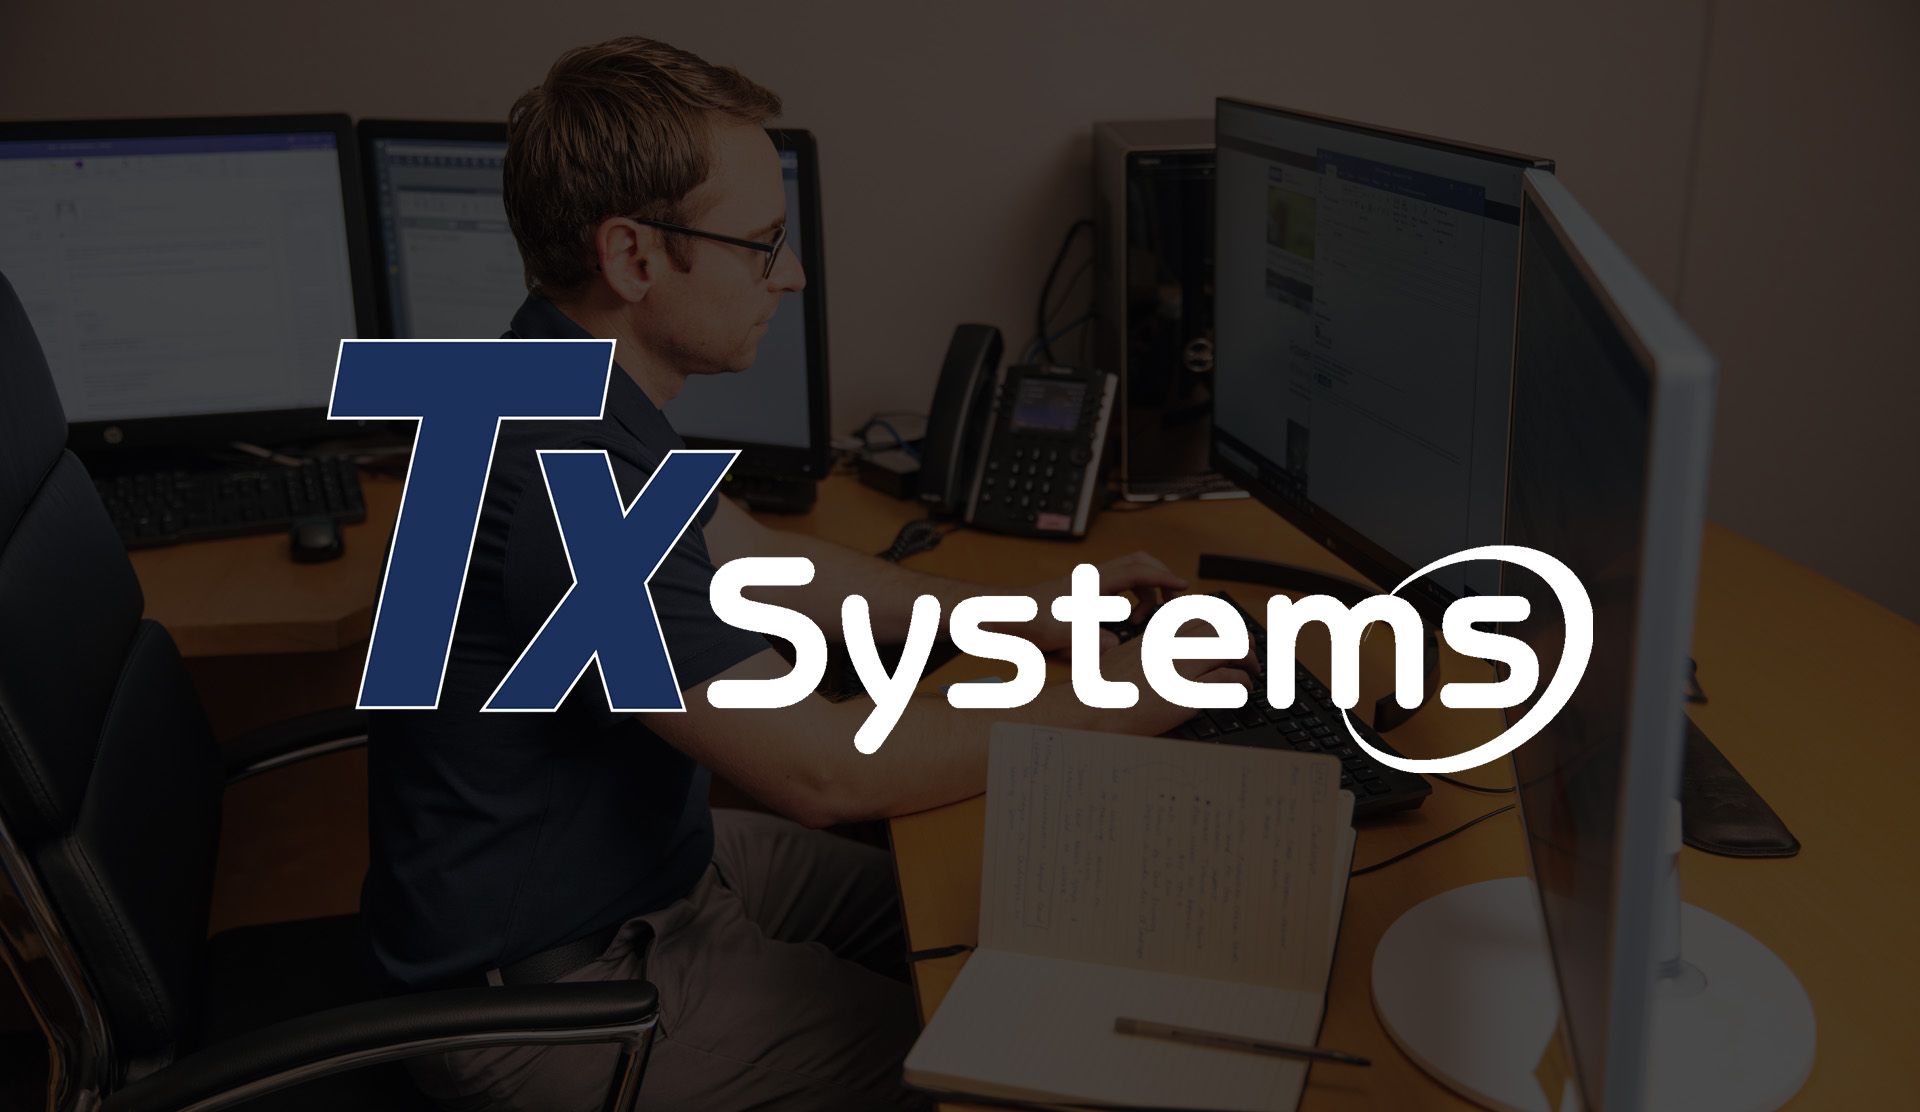 (c) Txsystems.com